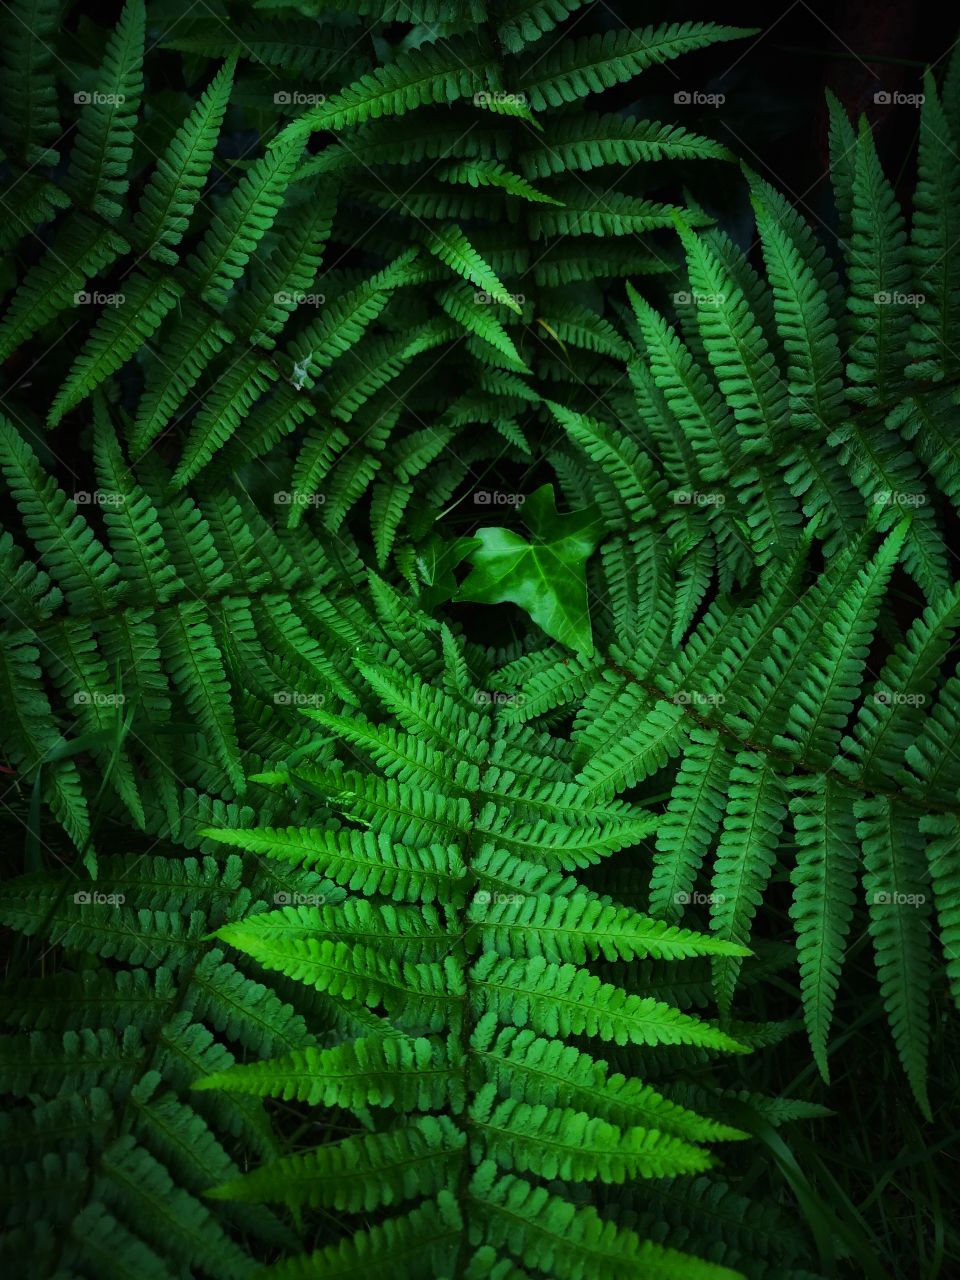 Green fern on the black background